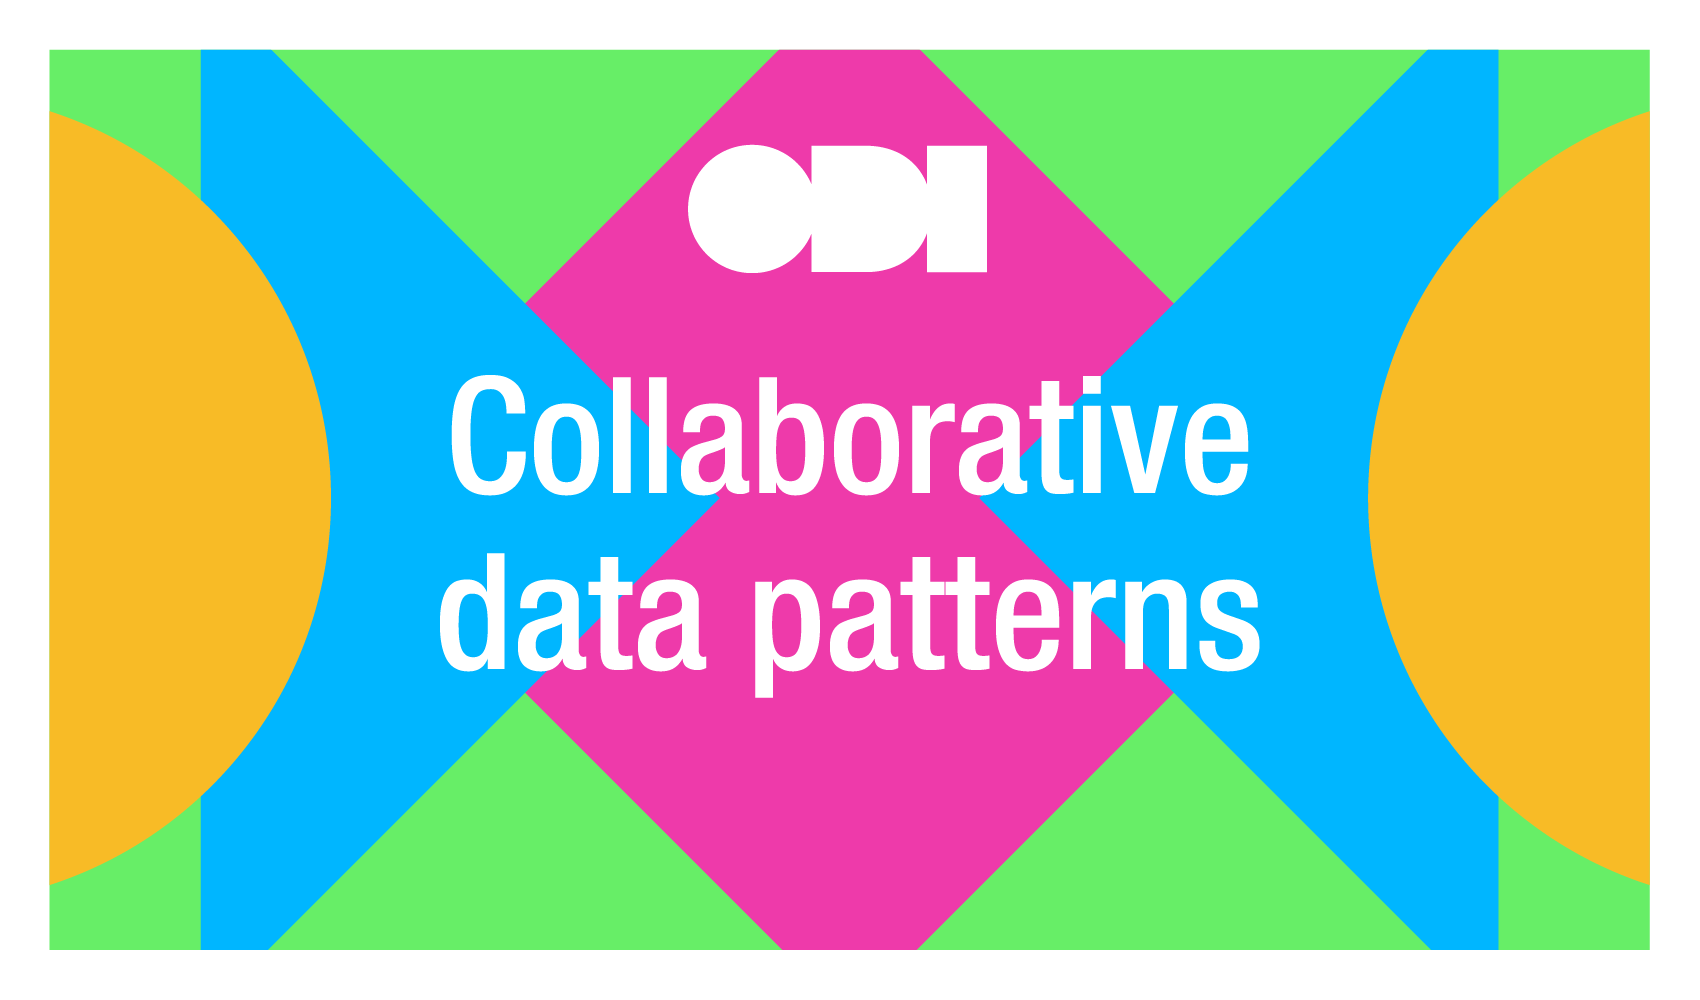 Be collaborative. Connecticut data collaborative. Data pattern